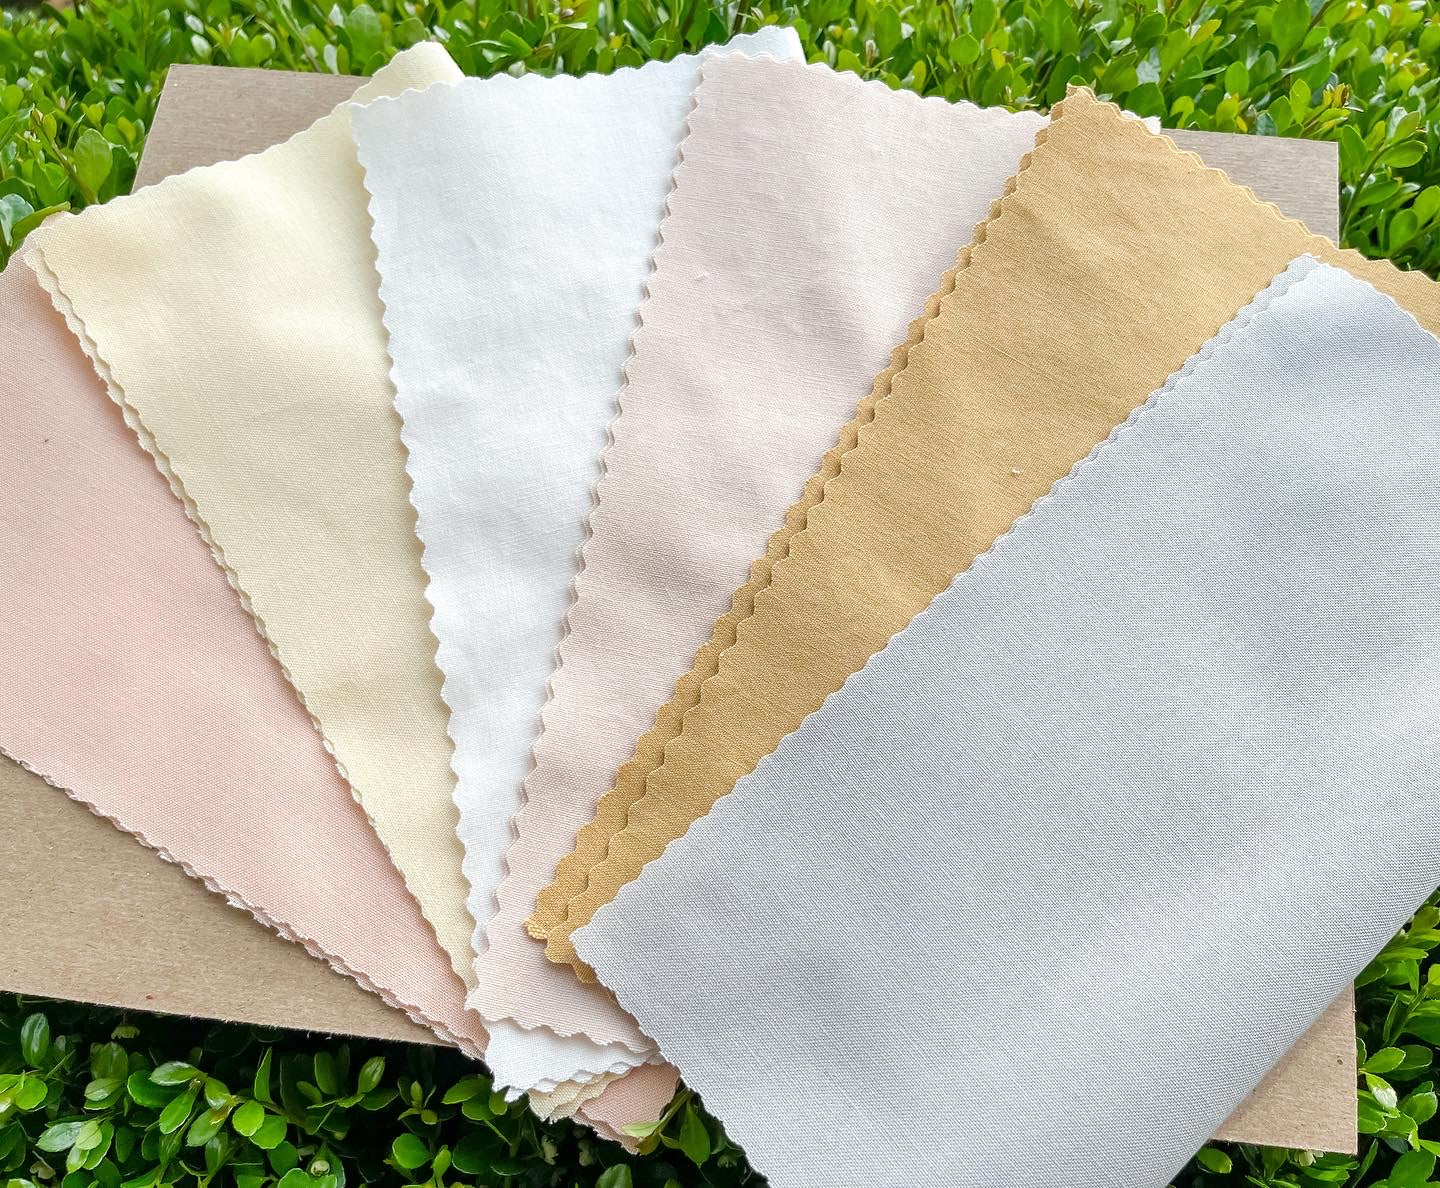 COHEALI 2 Sets 7pcs Quilting Fabric Bulk Fabric Squares Linen Sewing Fabric  Linen Sewing Cloth Quilted Fabric Linen Fabric Cloth for DIY Self Made